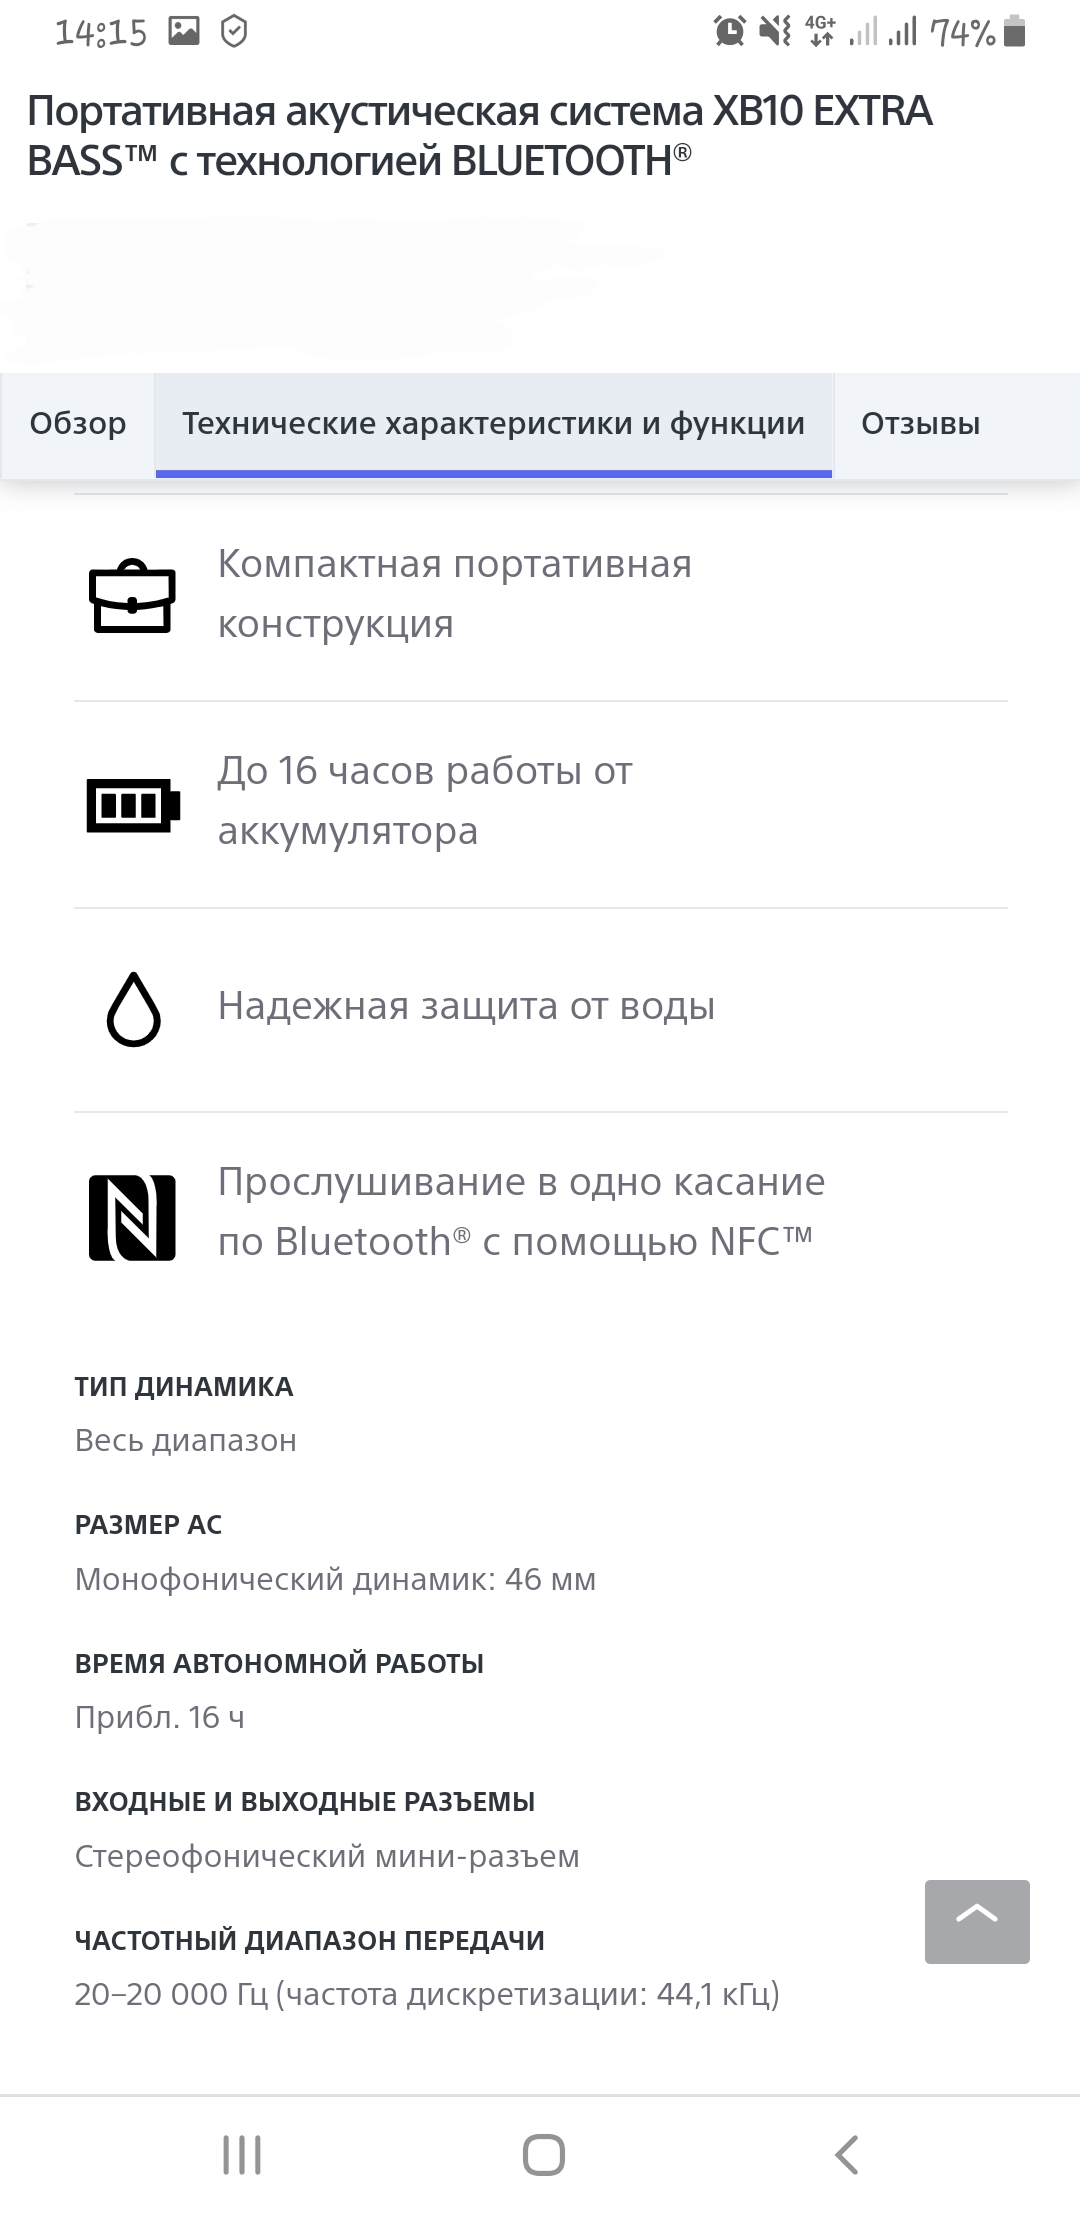 Саяногорск Инфо - screenshot_20210111-141611_chrome.jpg, Скачано: 101